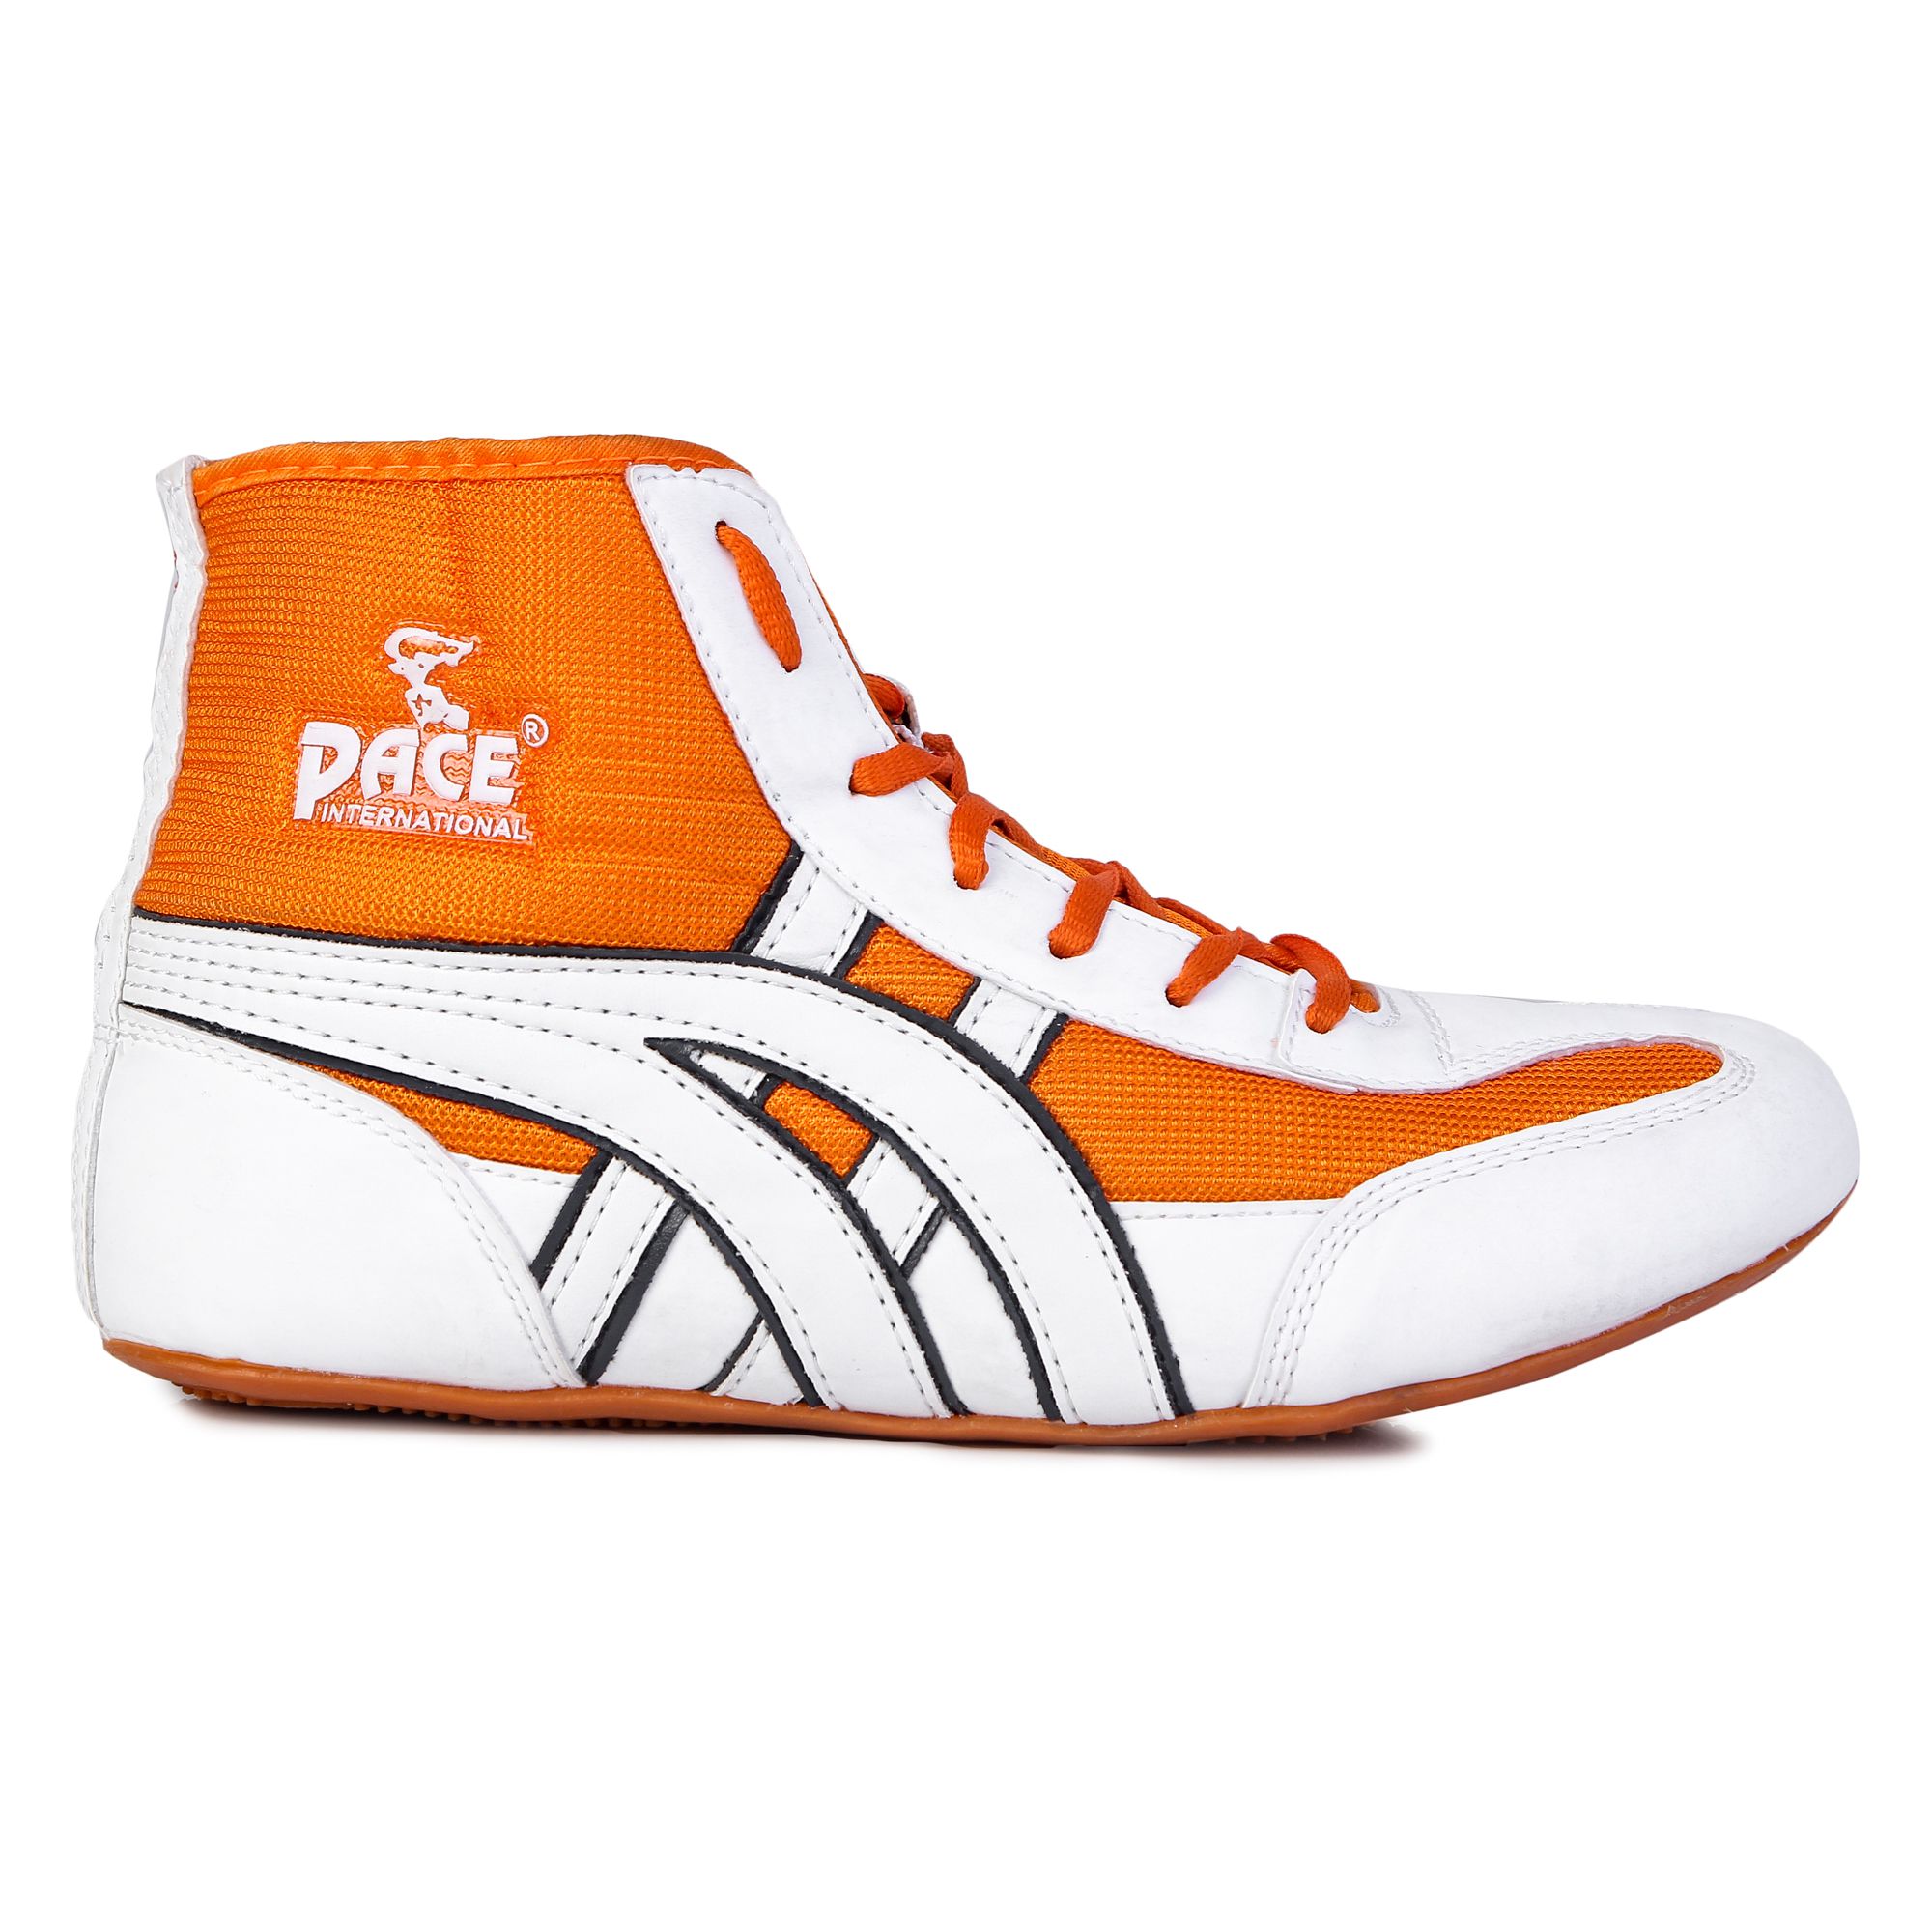 Pace international Kabaddi shoes Orange Indoor Court Shoes - Buy Pace ...